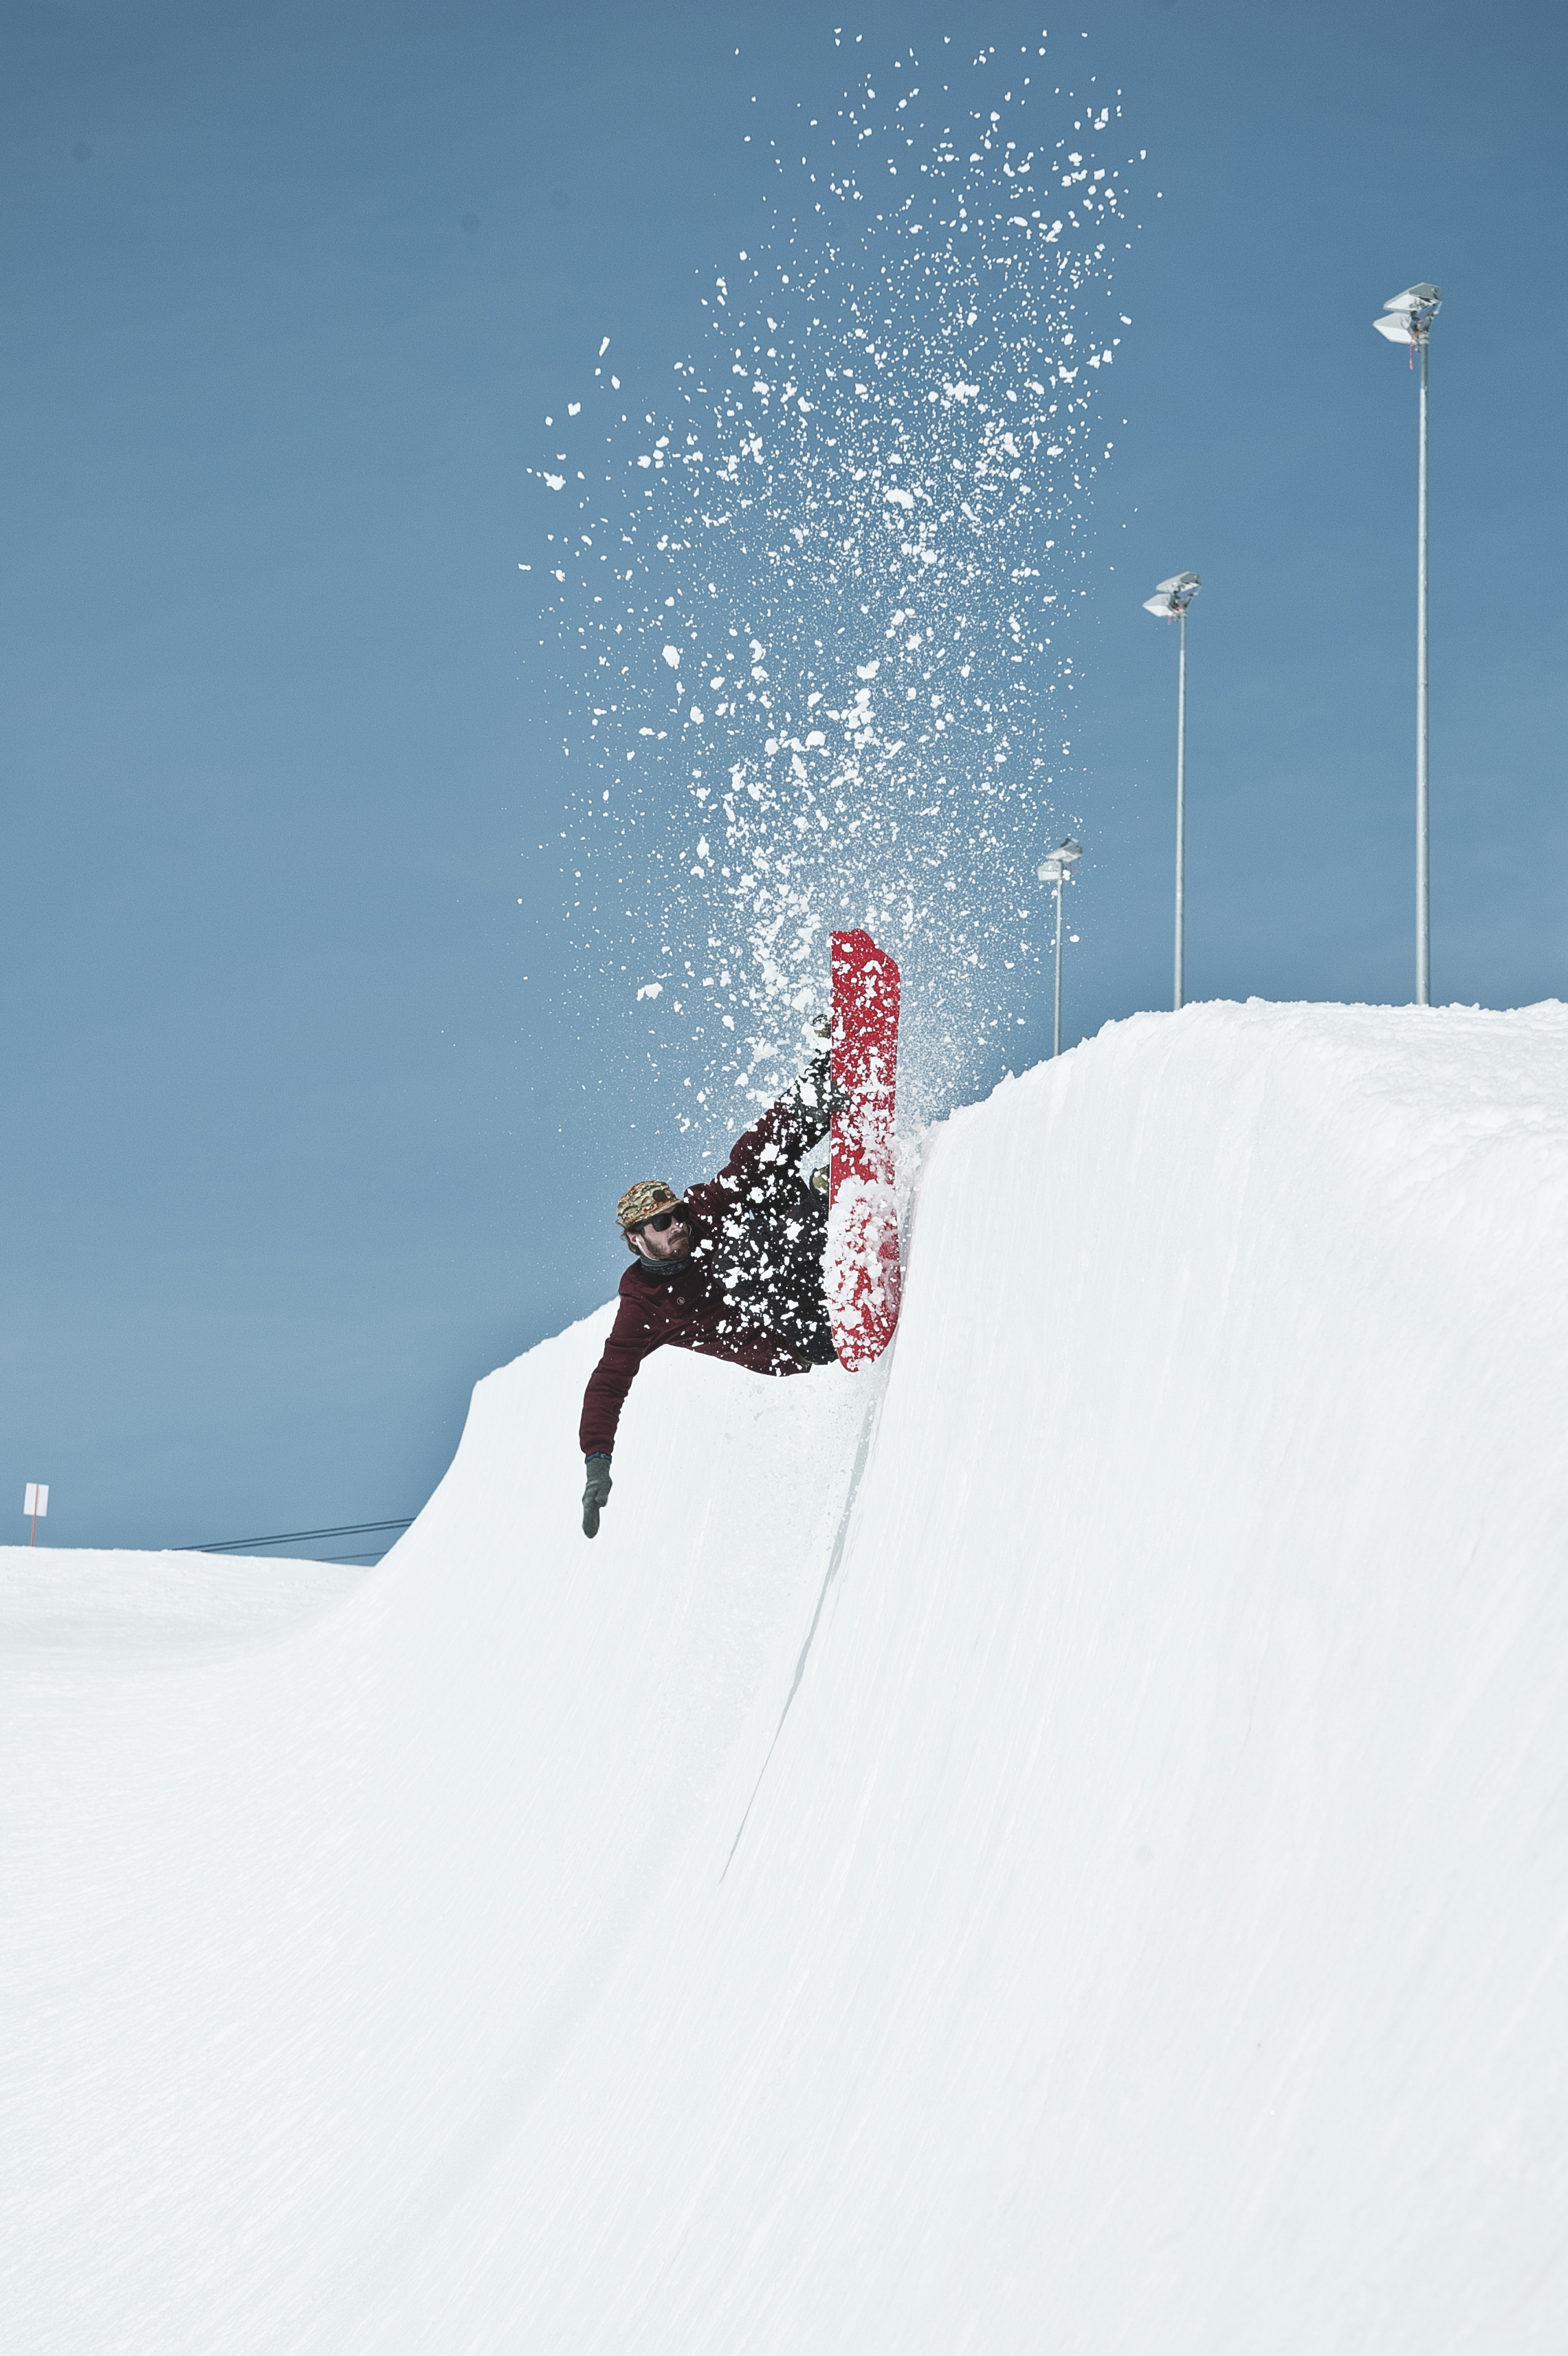 Korua Pencil Snowboard - The Snowboarders Journal